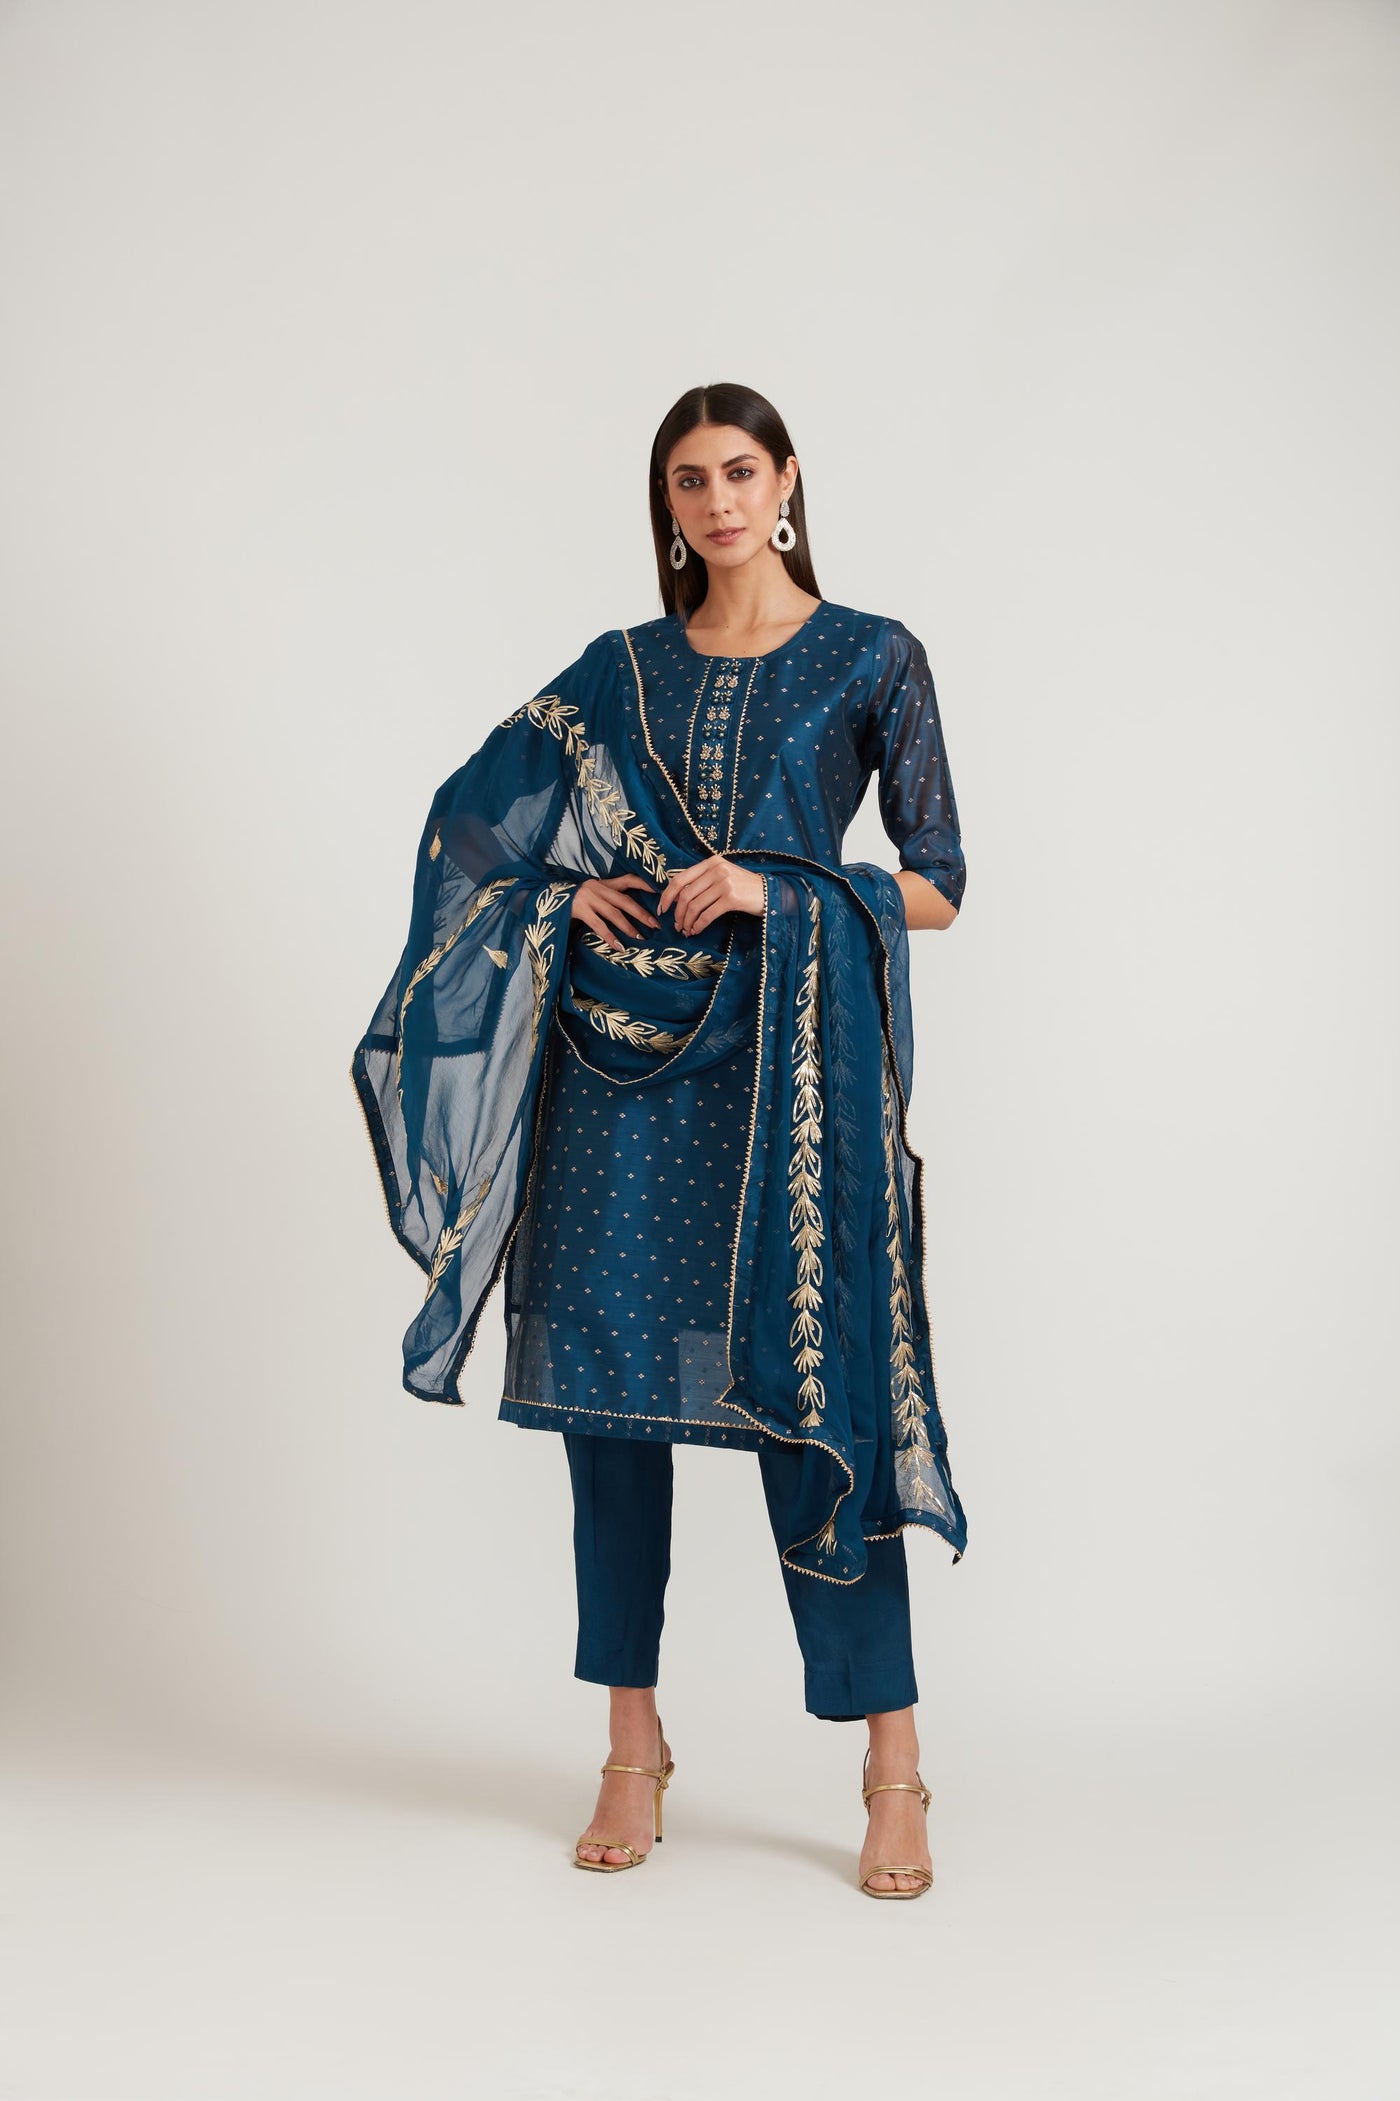 Neeru's Peacock Color Chanderi Fabric Suit Set